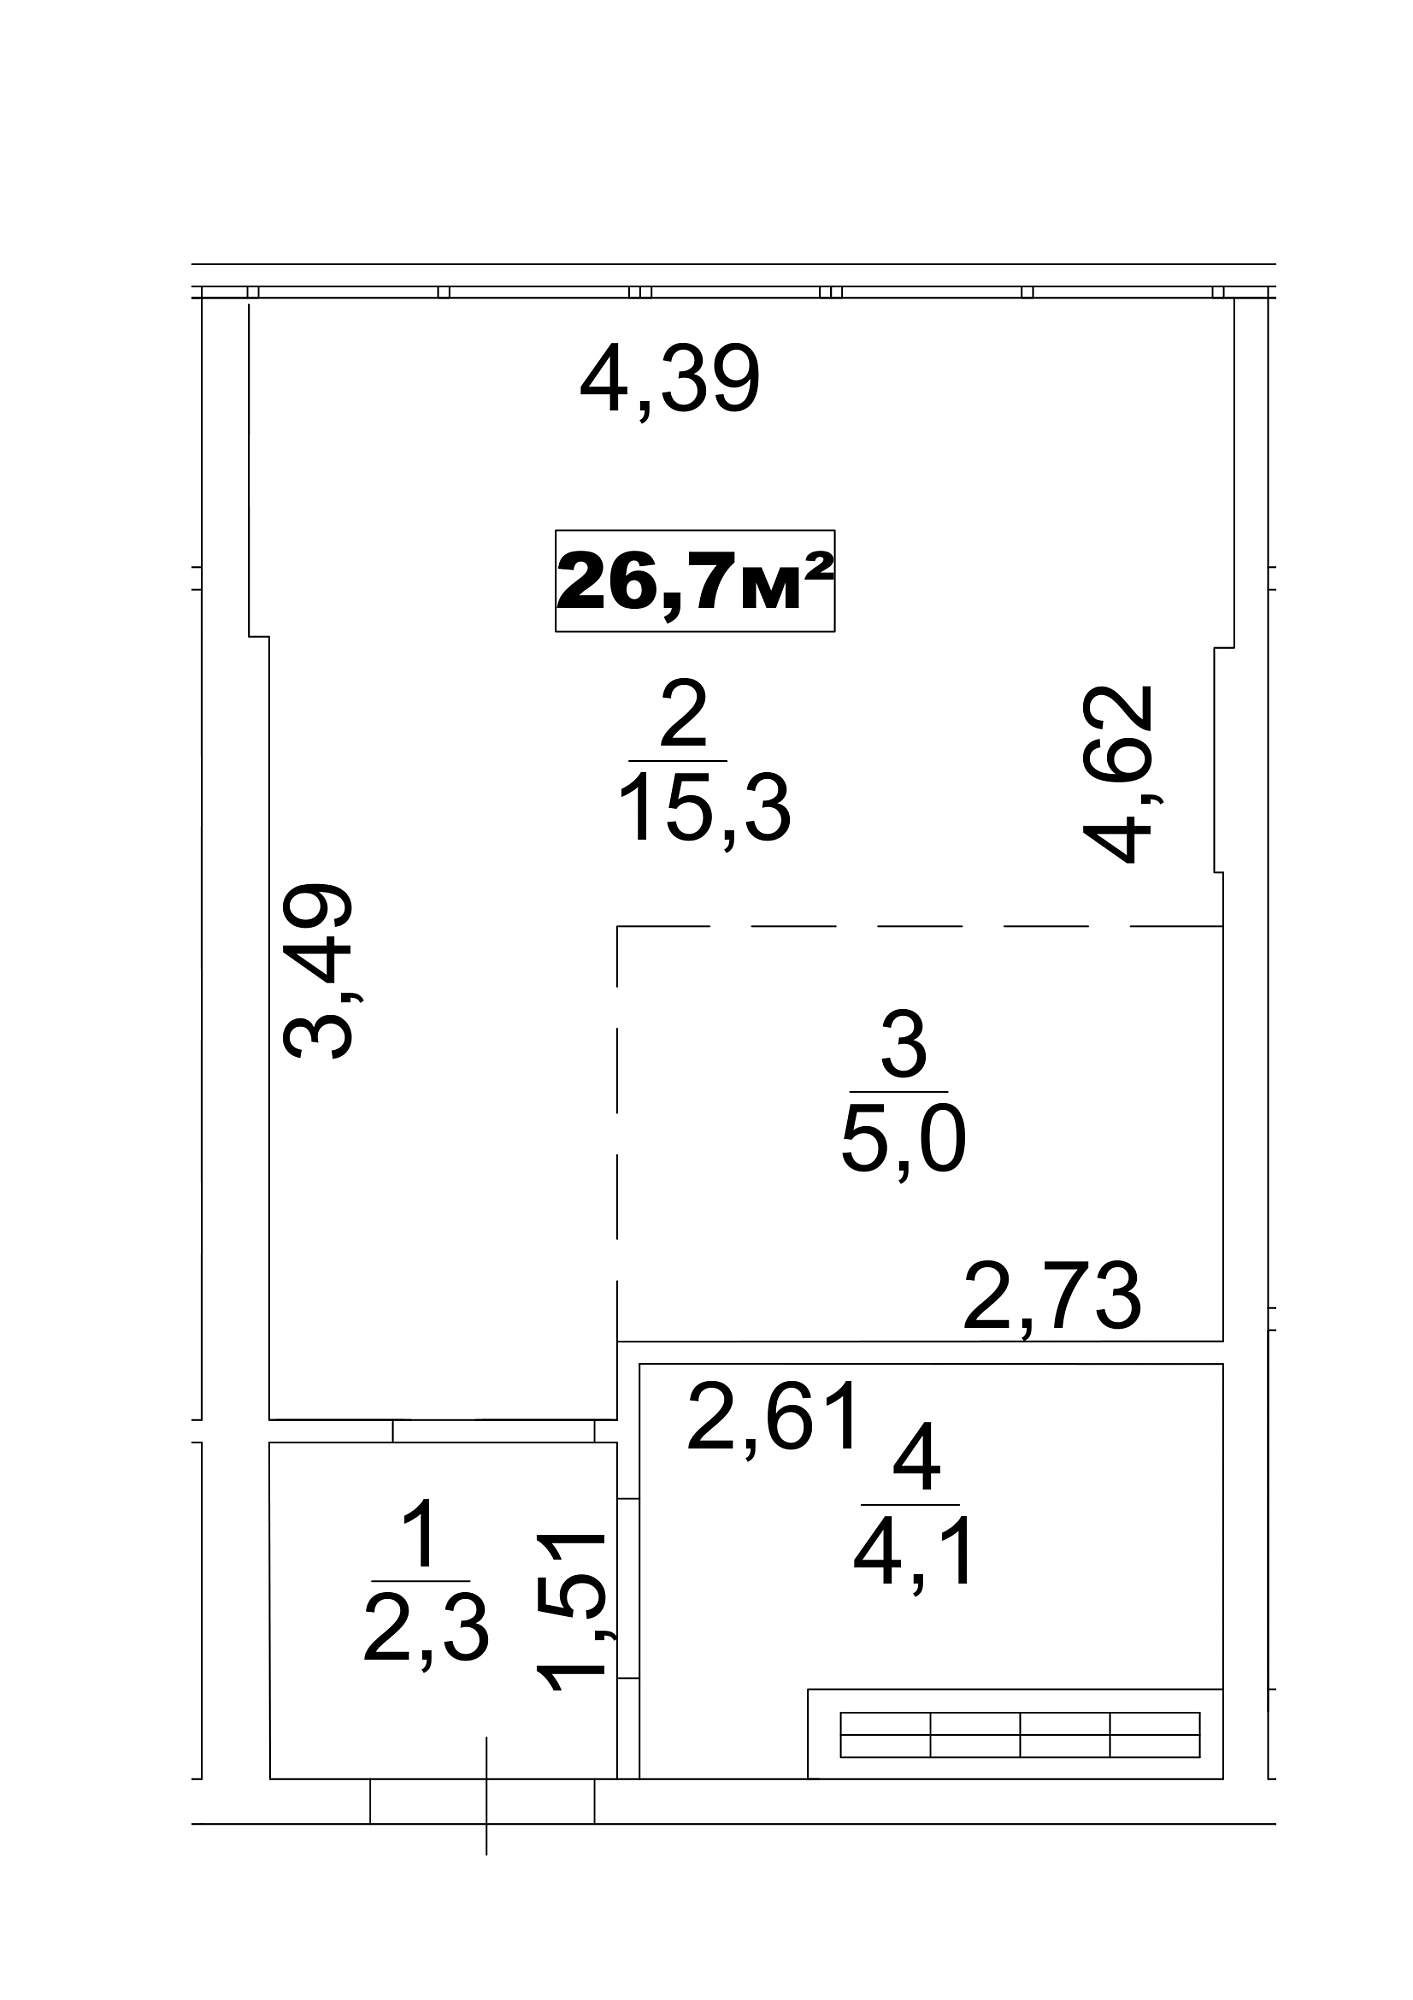 Planning Smart flats area 26.7m2, AB-13-07/0054в.